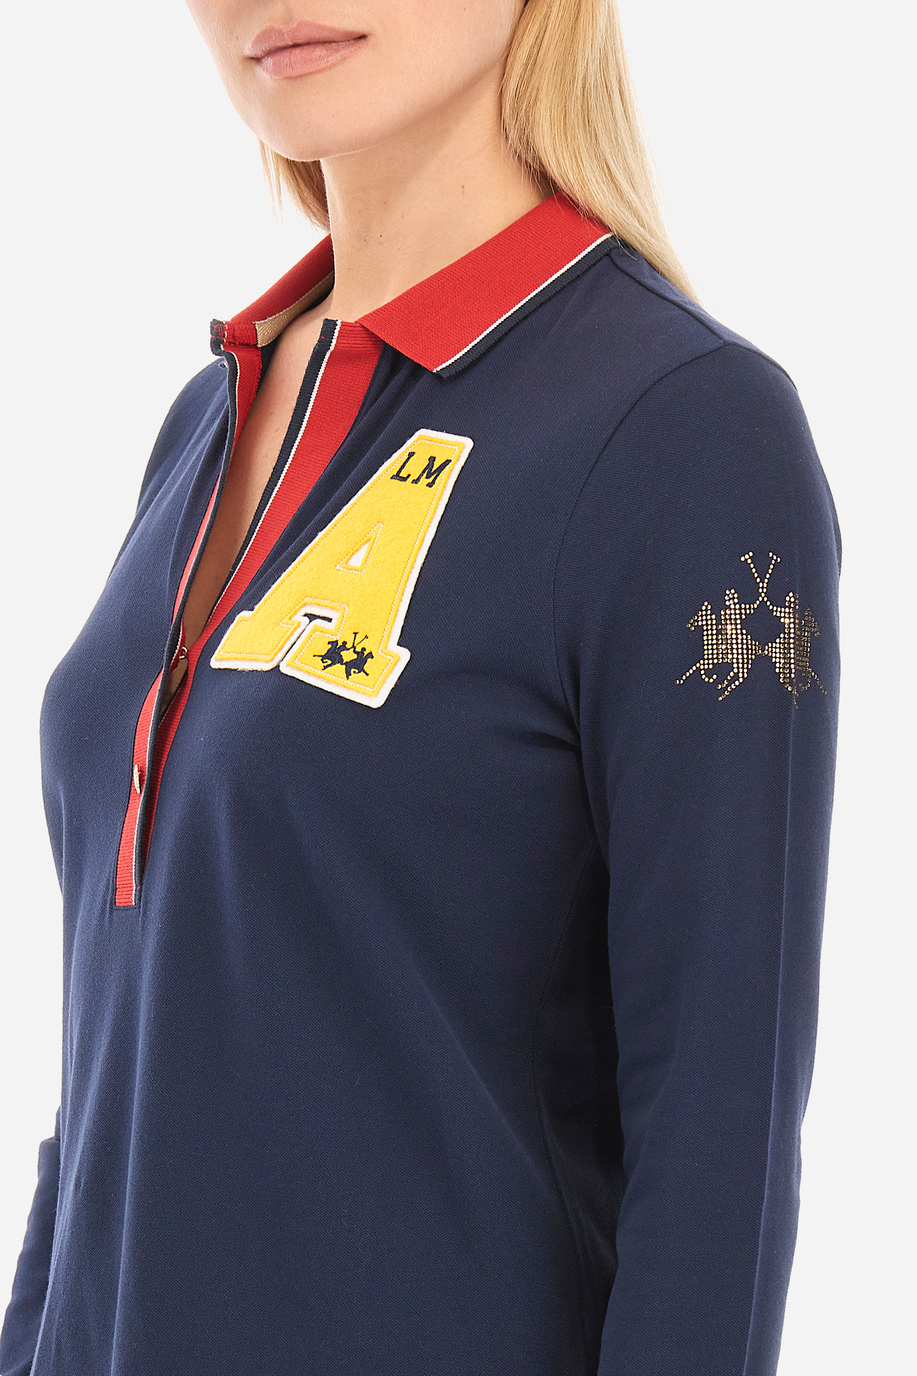 Damen-Poloshirt Regular Fit- Wendolyn - Poloshirts | La Martina - Official Online Shop